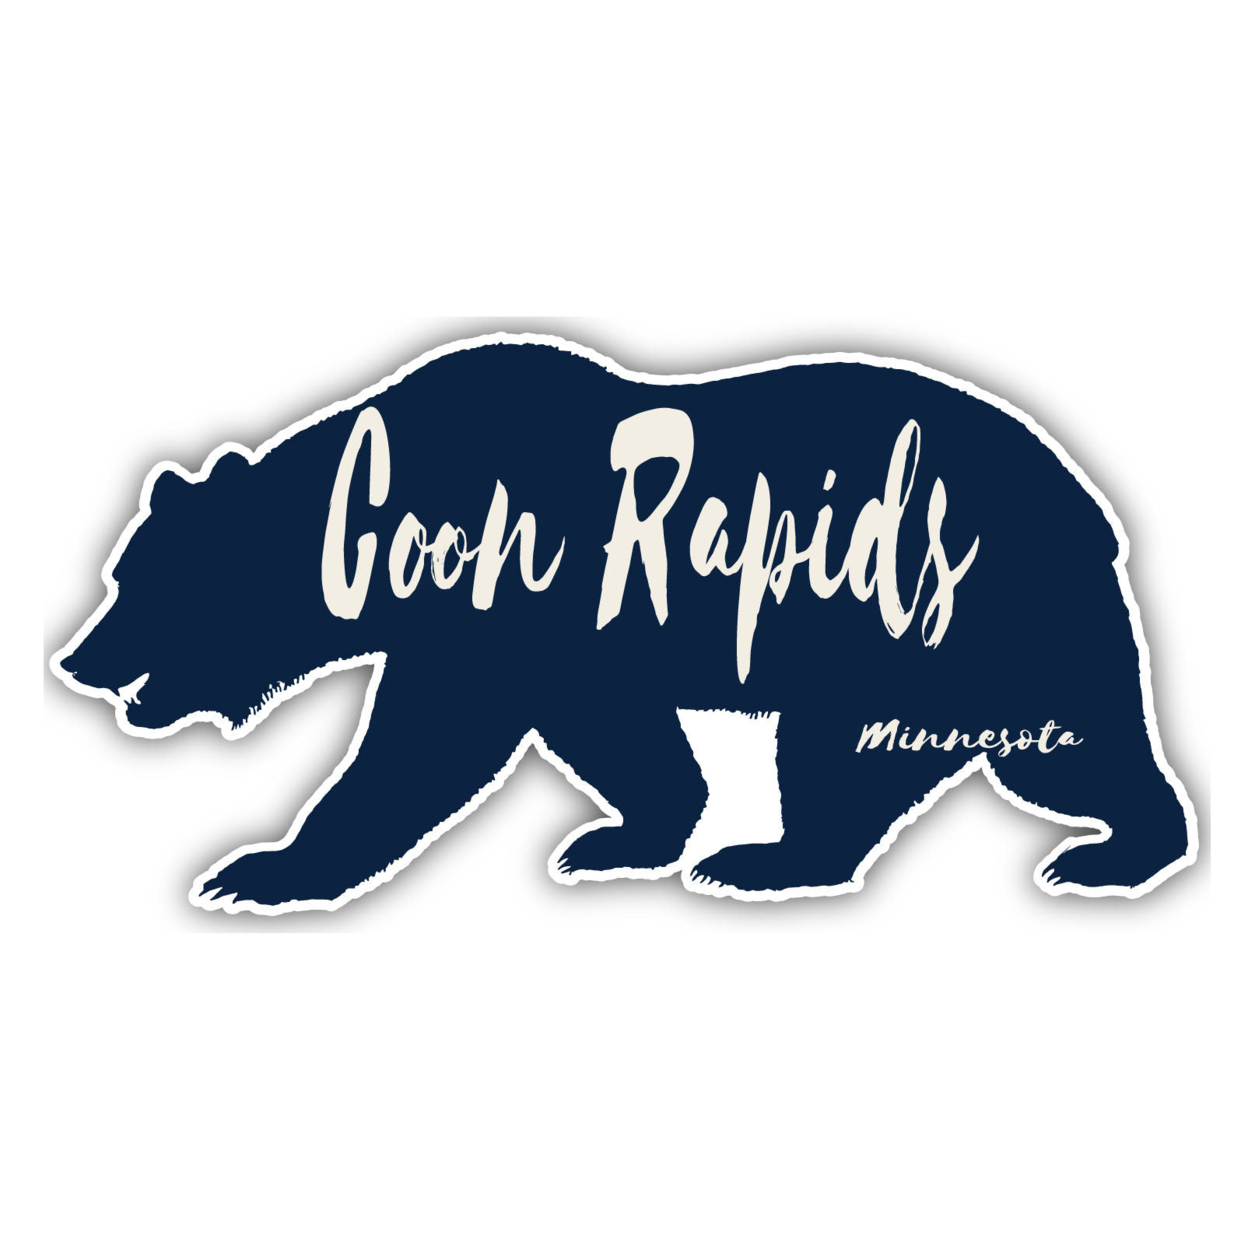 Coon Rapids Minnesota Souvenir Decorative Stickers (Choose Theme And Size) - Single Unit, 6-Inch, Camp Life